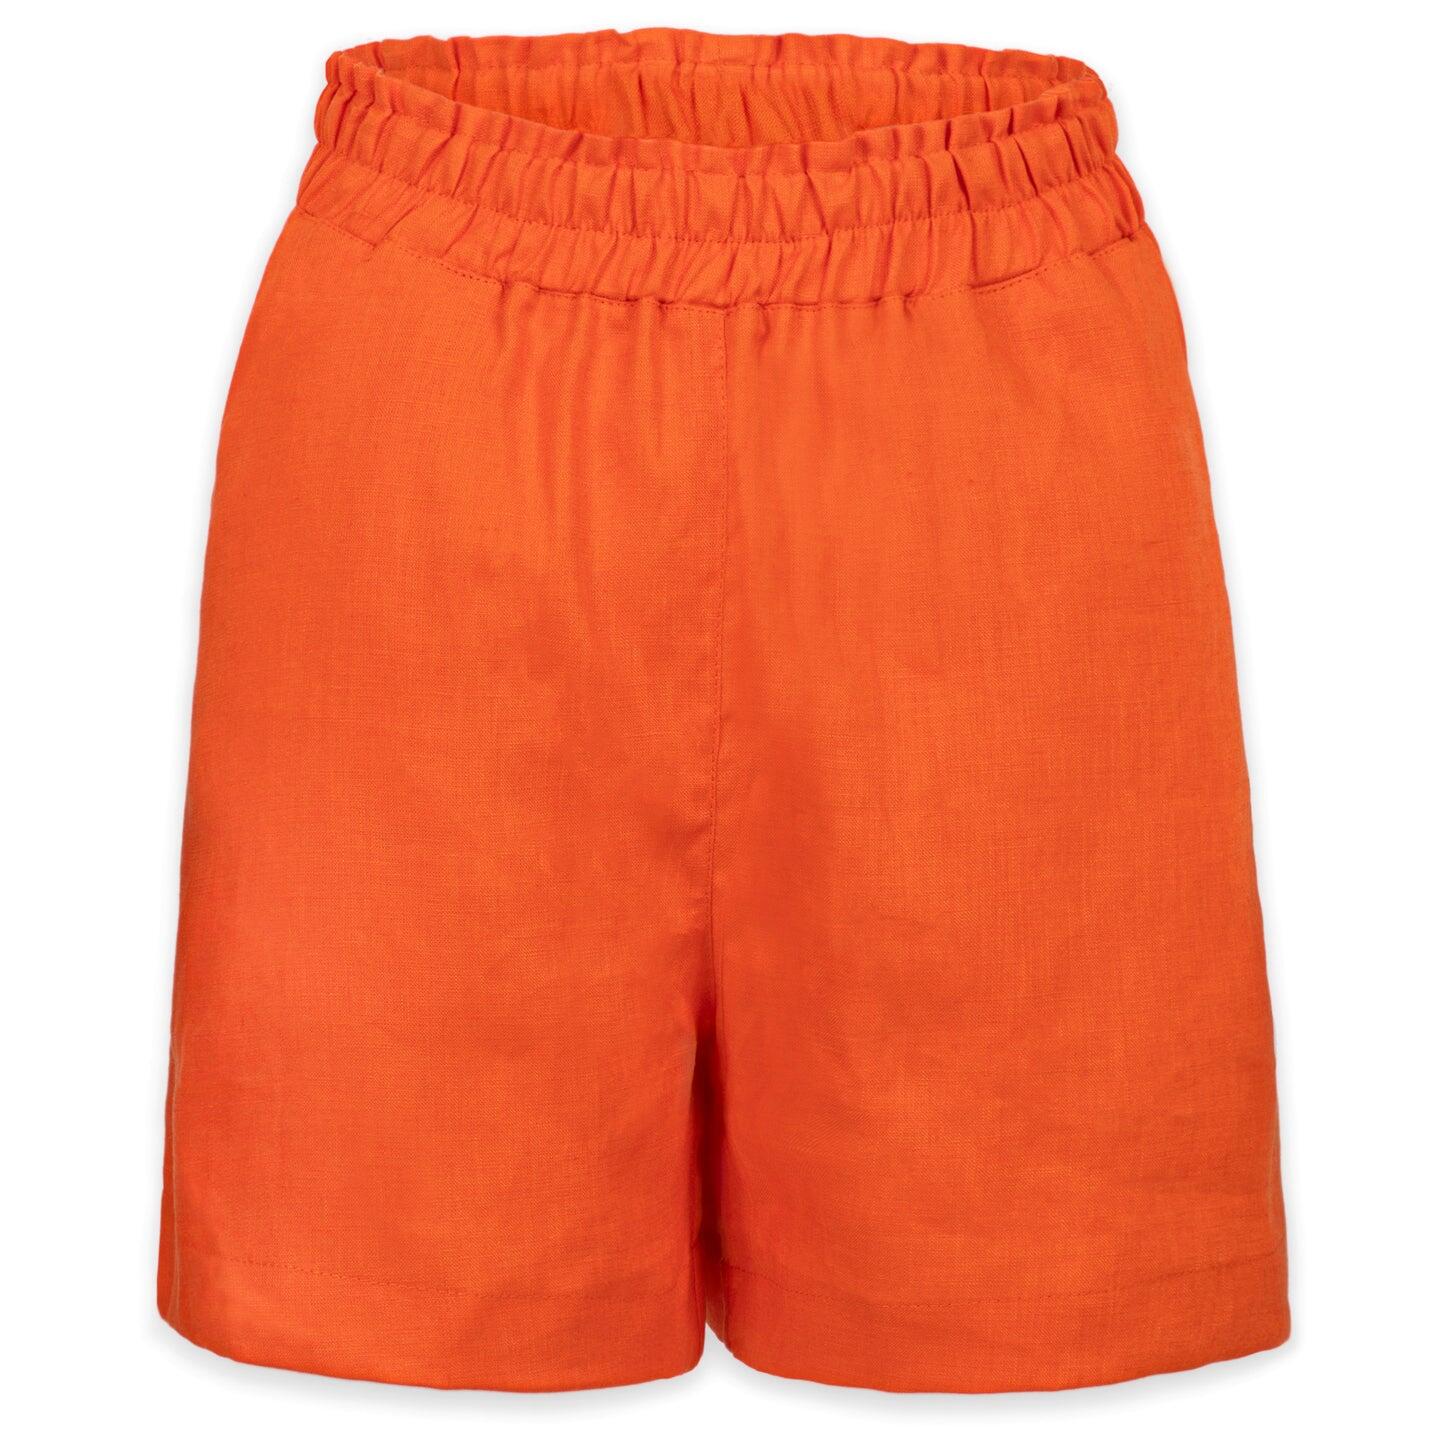 Neon Orange Linen Shorts